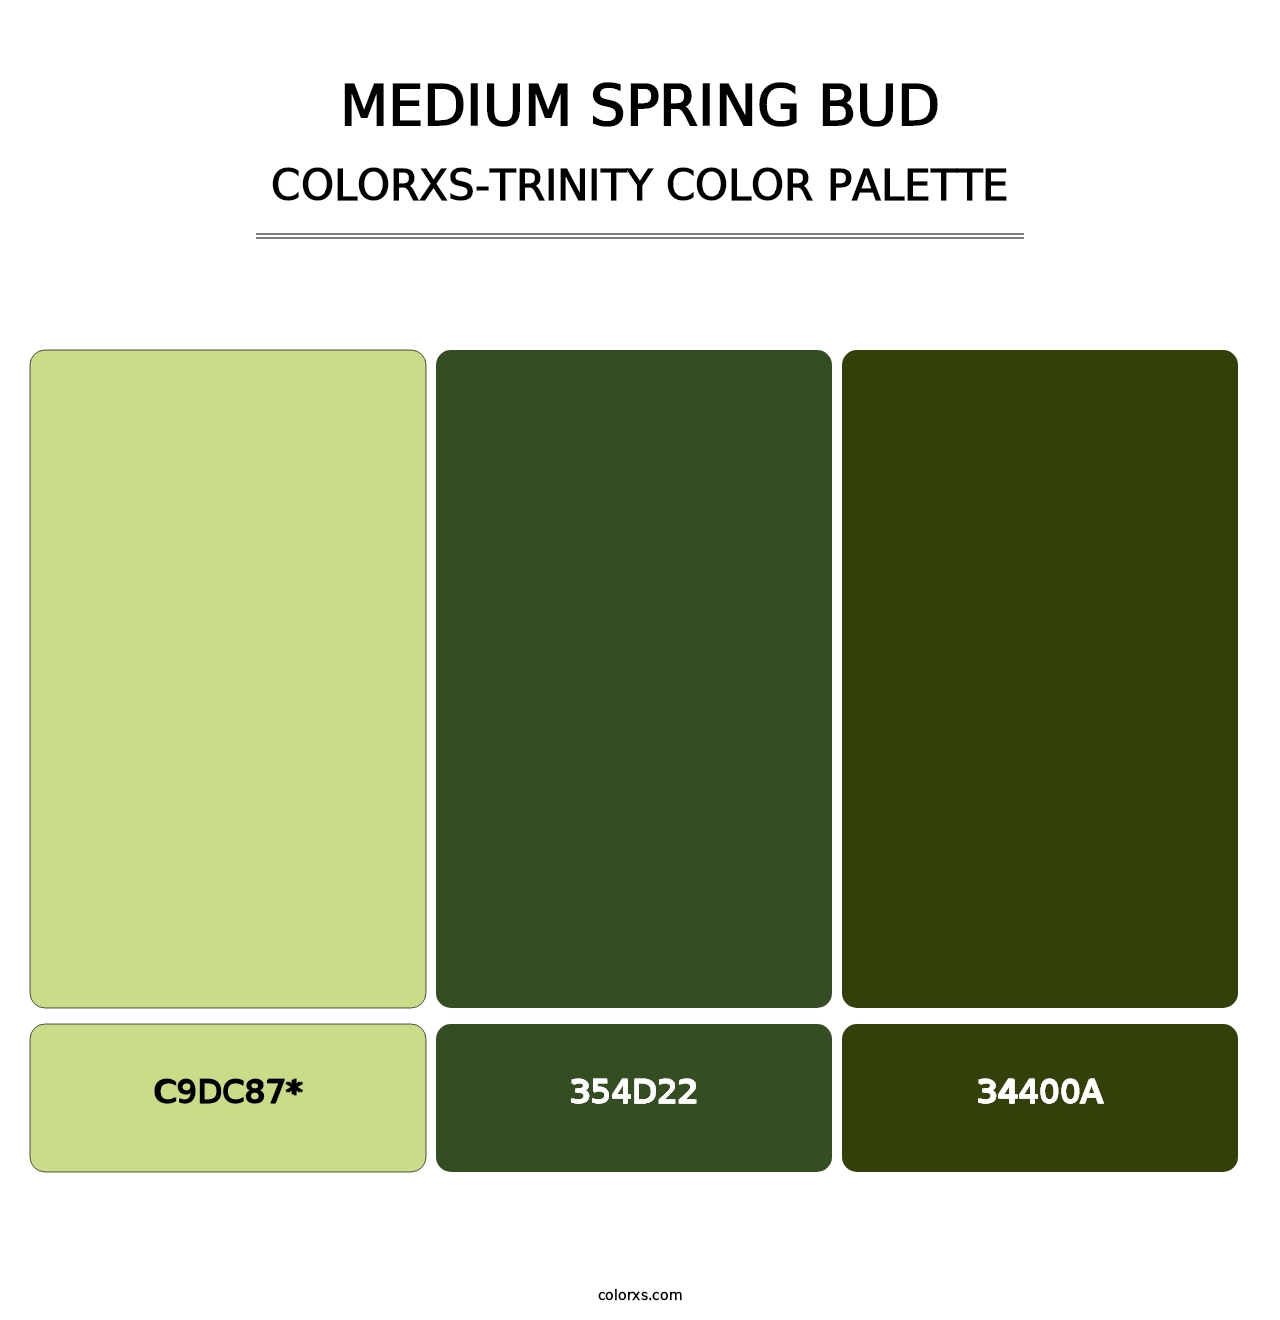 Medium Spring Bud - Colorxs Trinity Palette